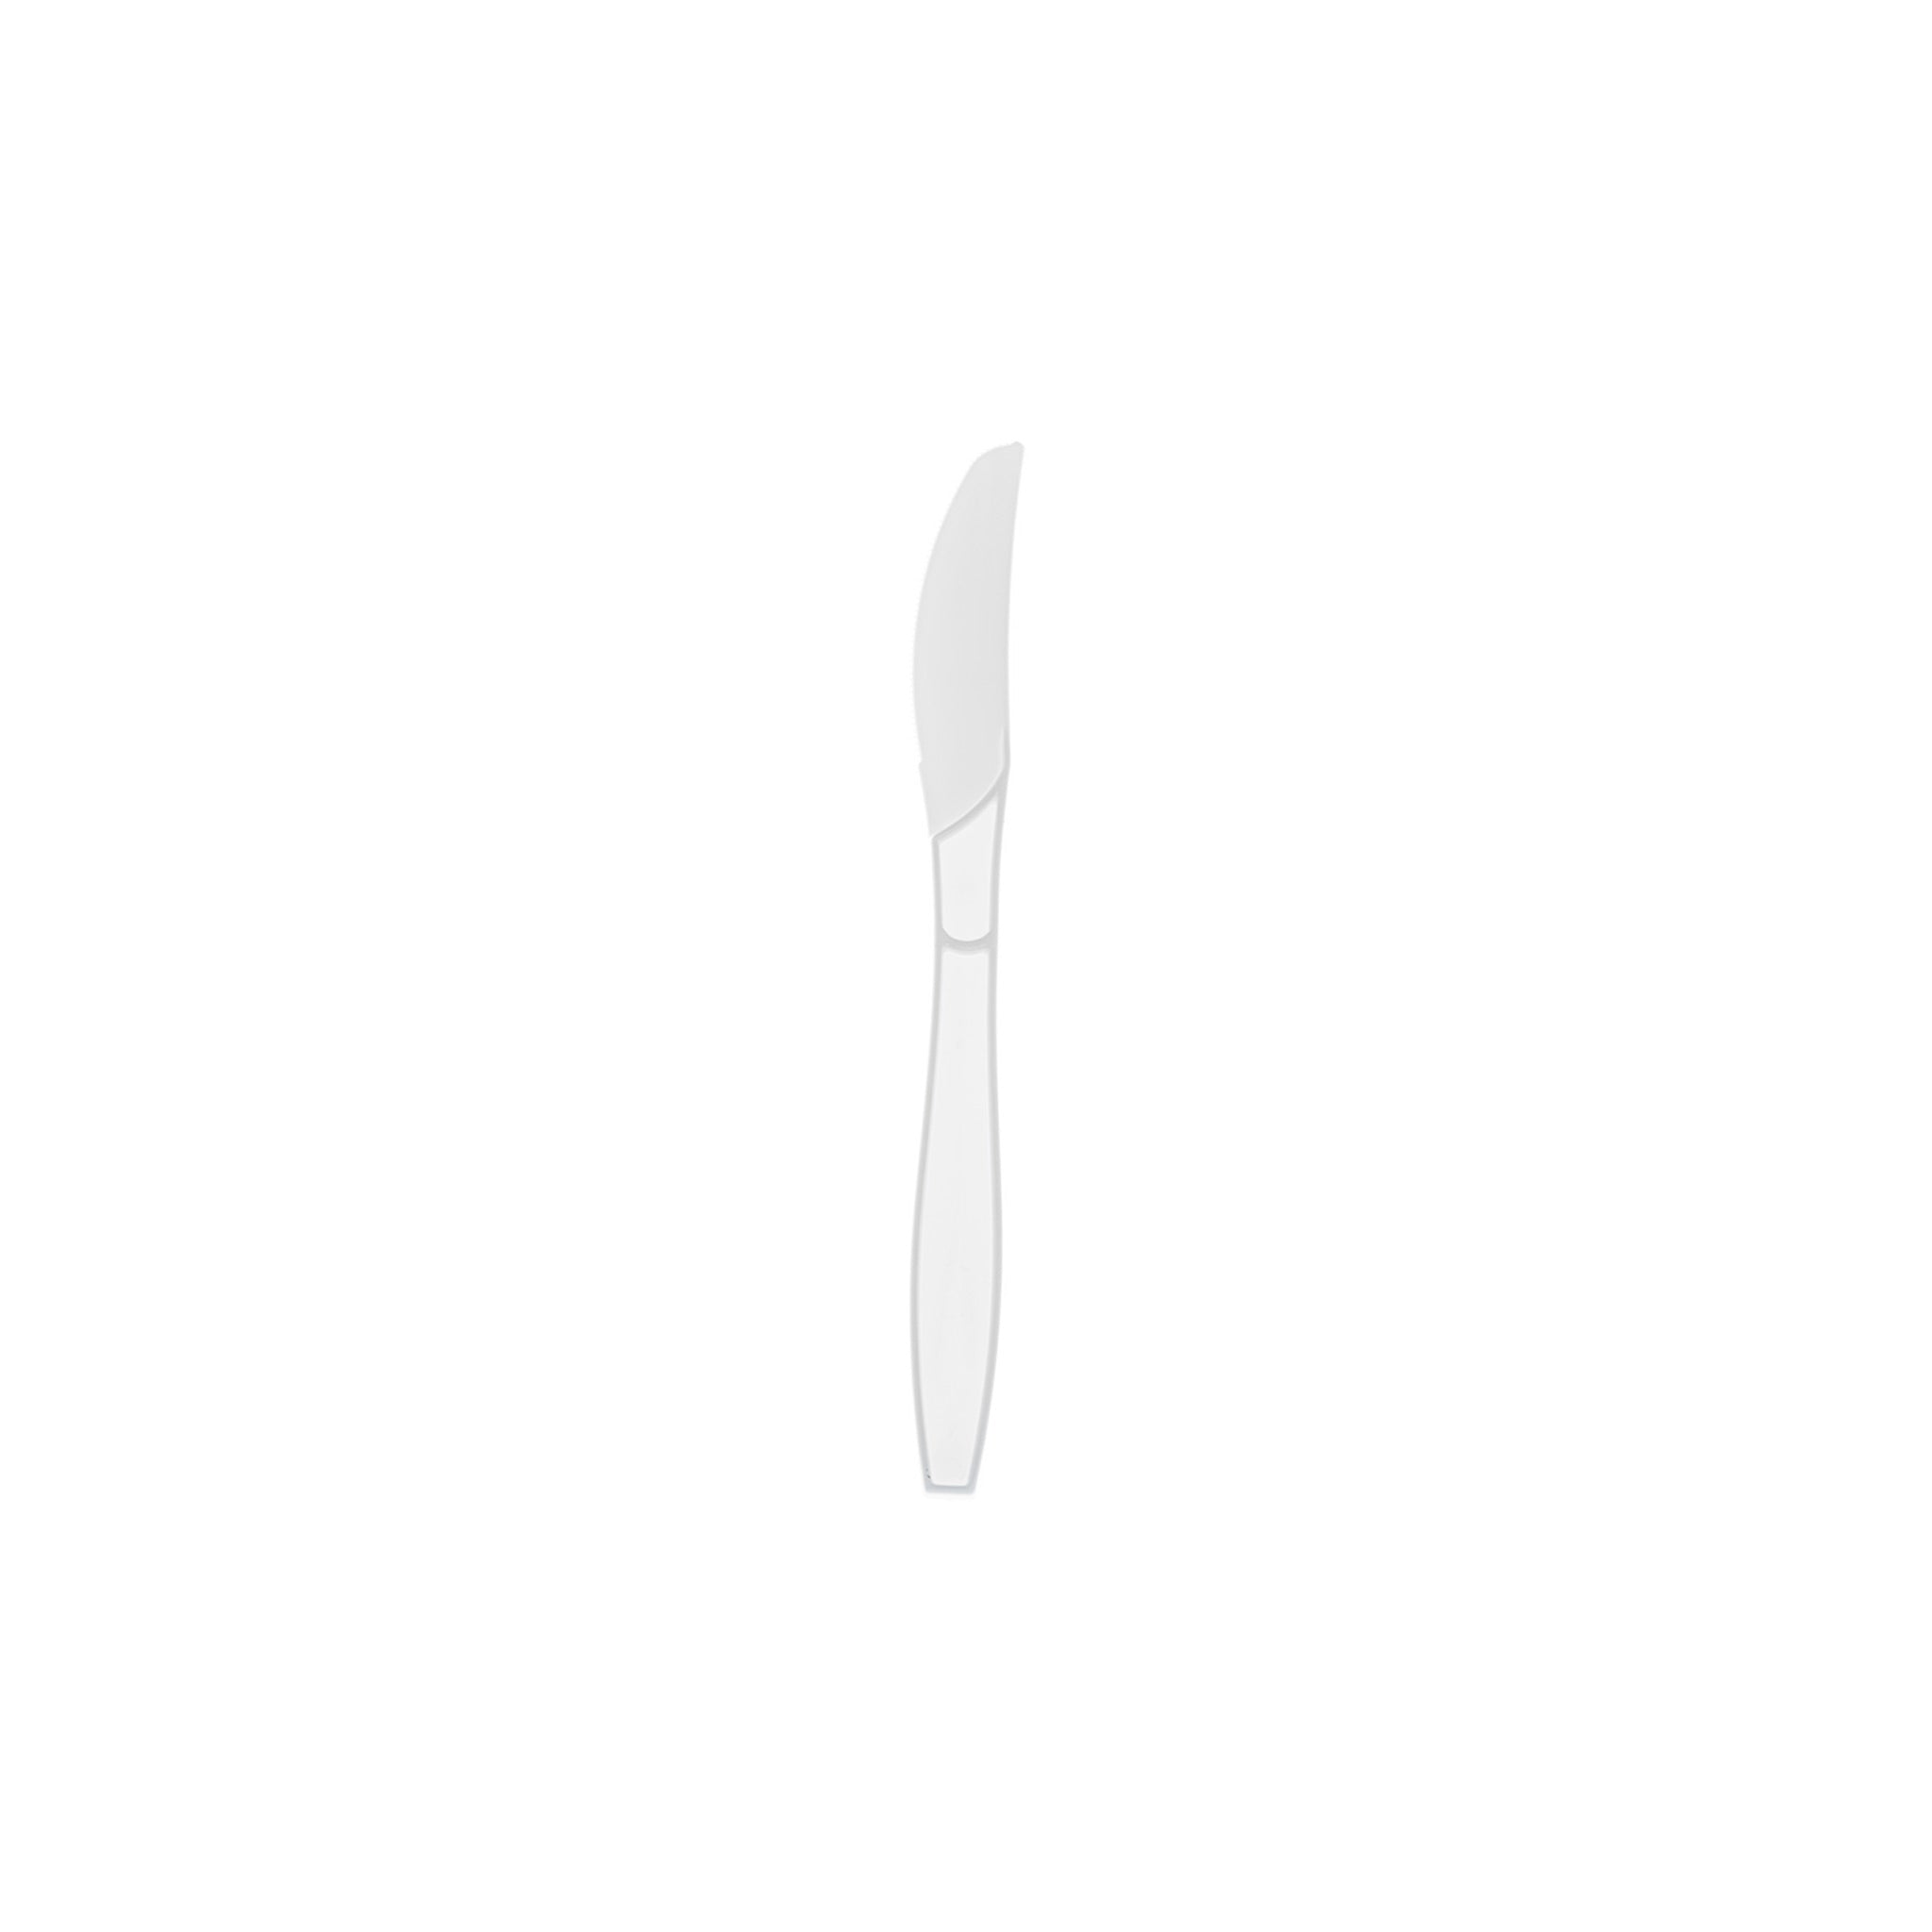 100 pieces Heavy Duty Knife, White - 4.6 Gram